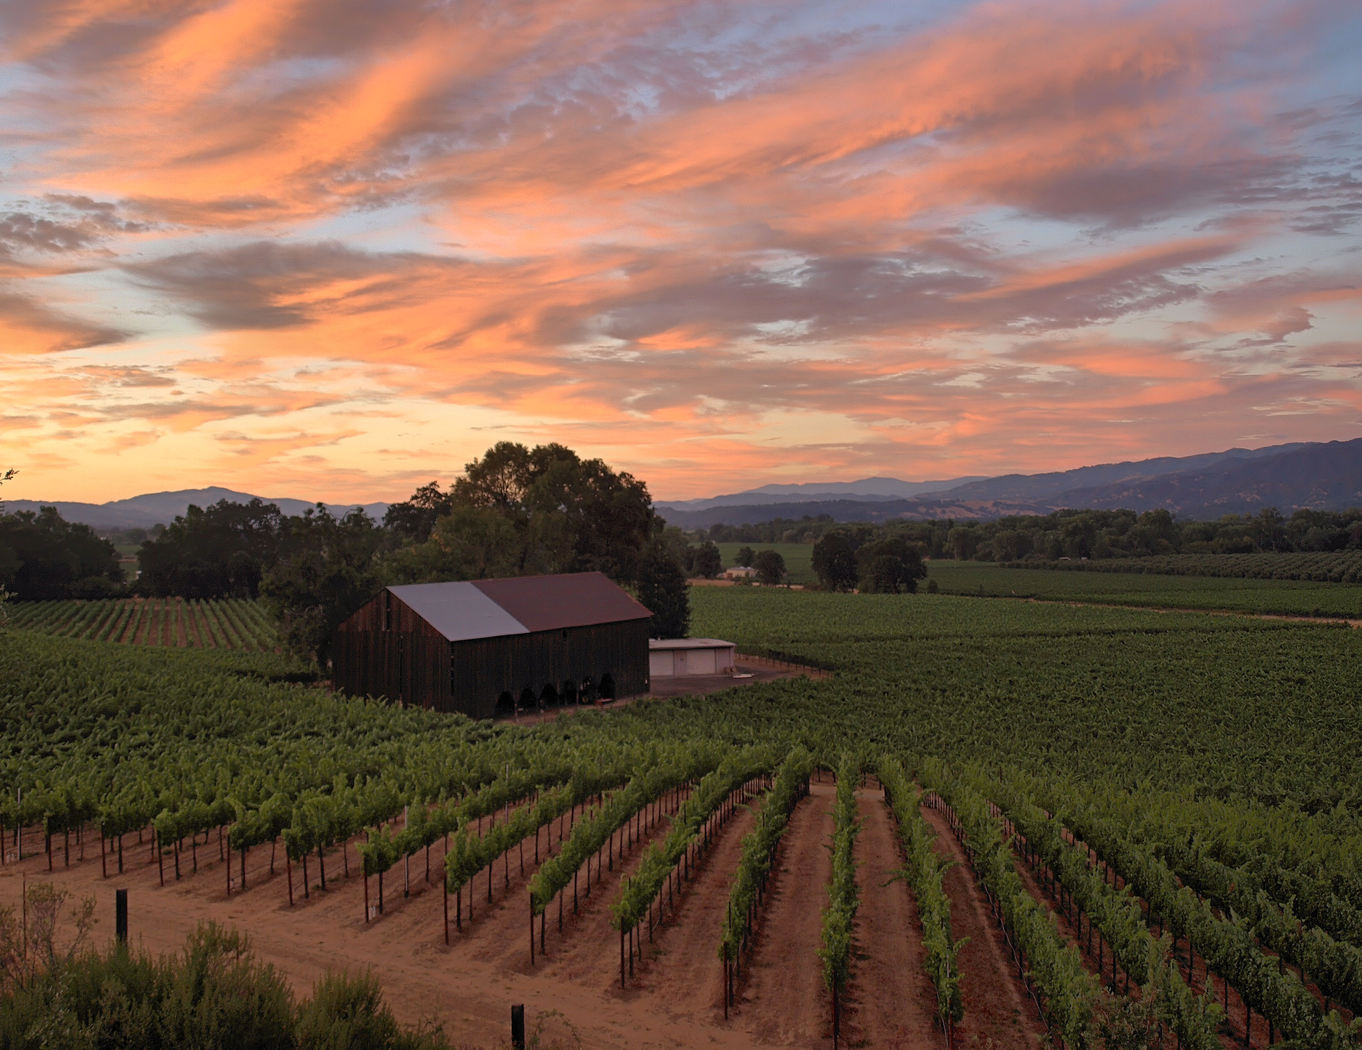 Ukiah, CA: View overlooking vineyard in the southern Ukiah valley